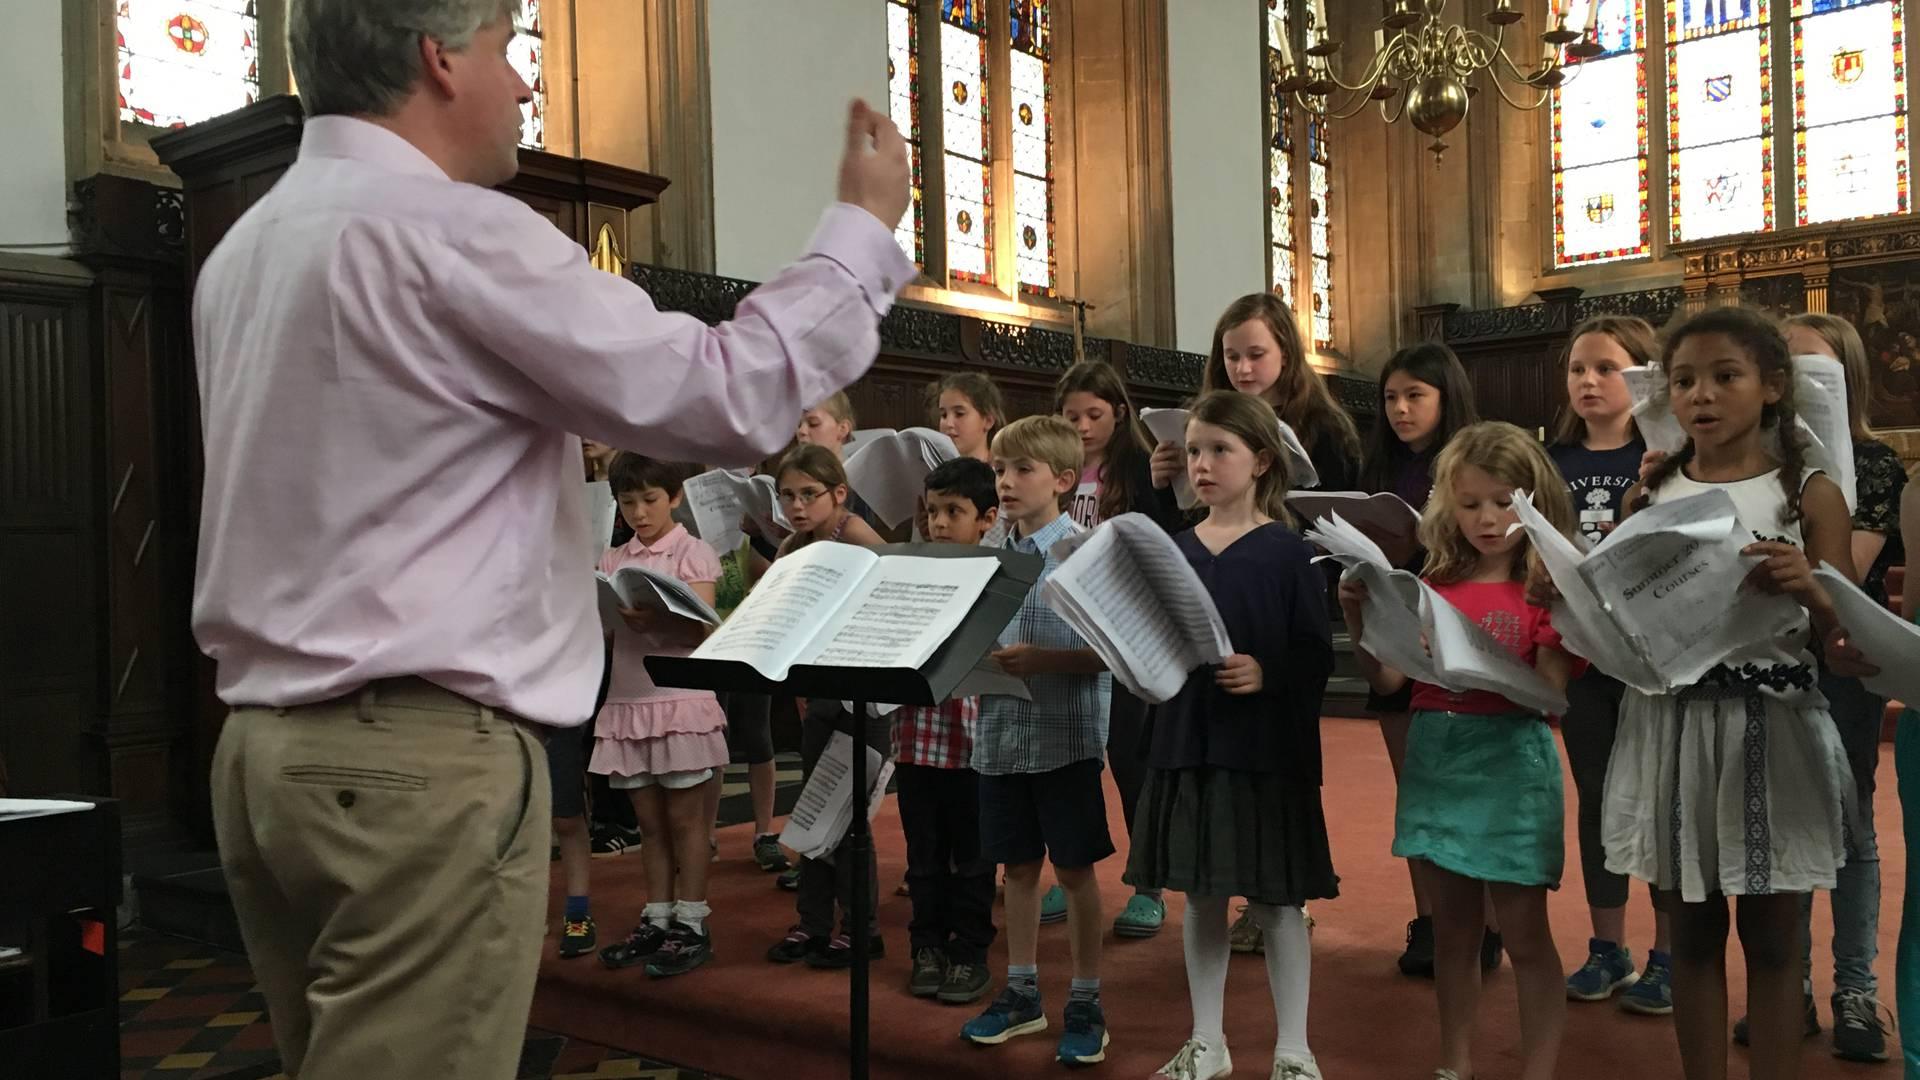 The Oxford & Cambridge Singing School photo